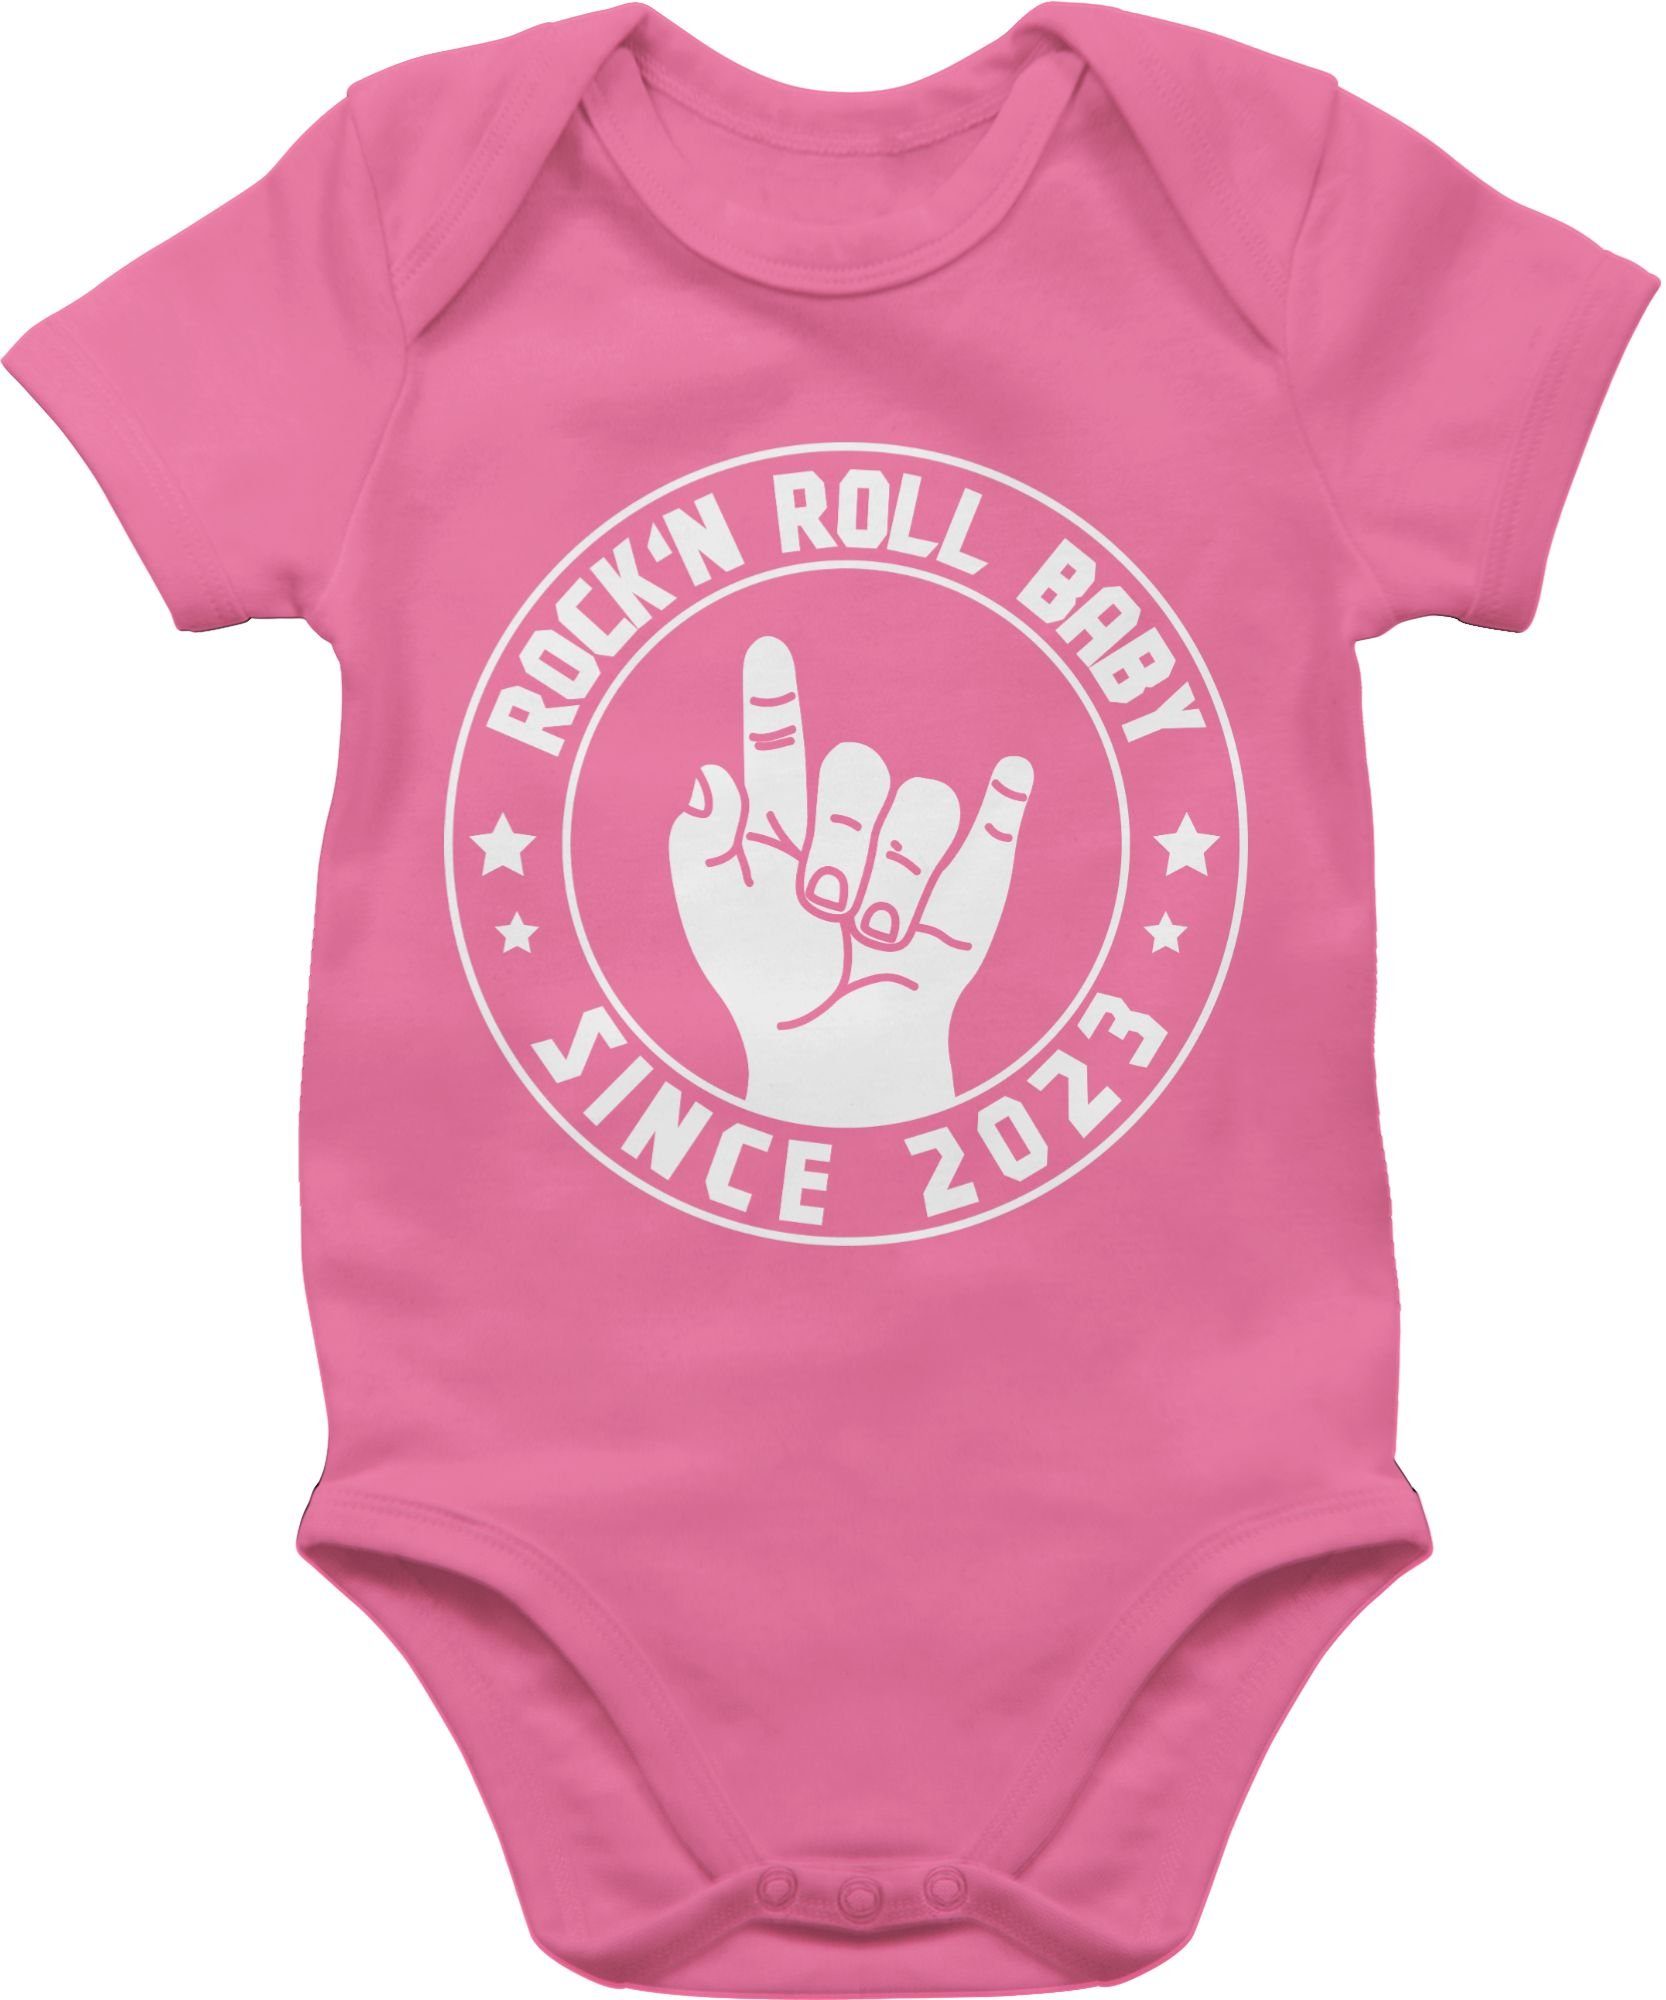 Shirtracer Shirtbody Rock'n Roll Baby Sprüche 1 Baby 2023 since Pink